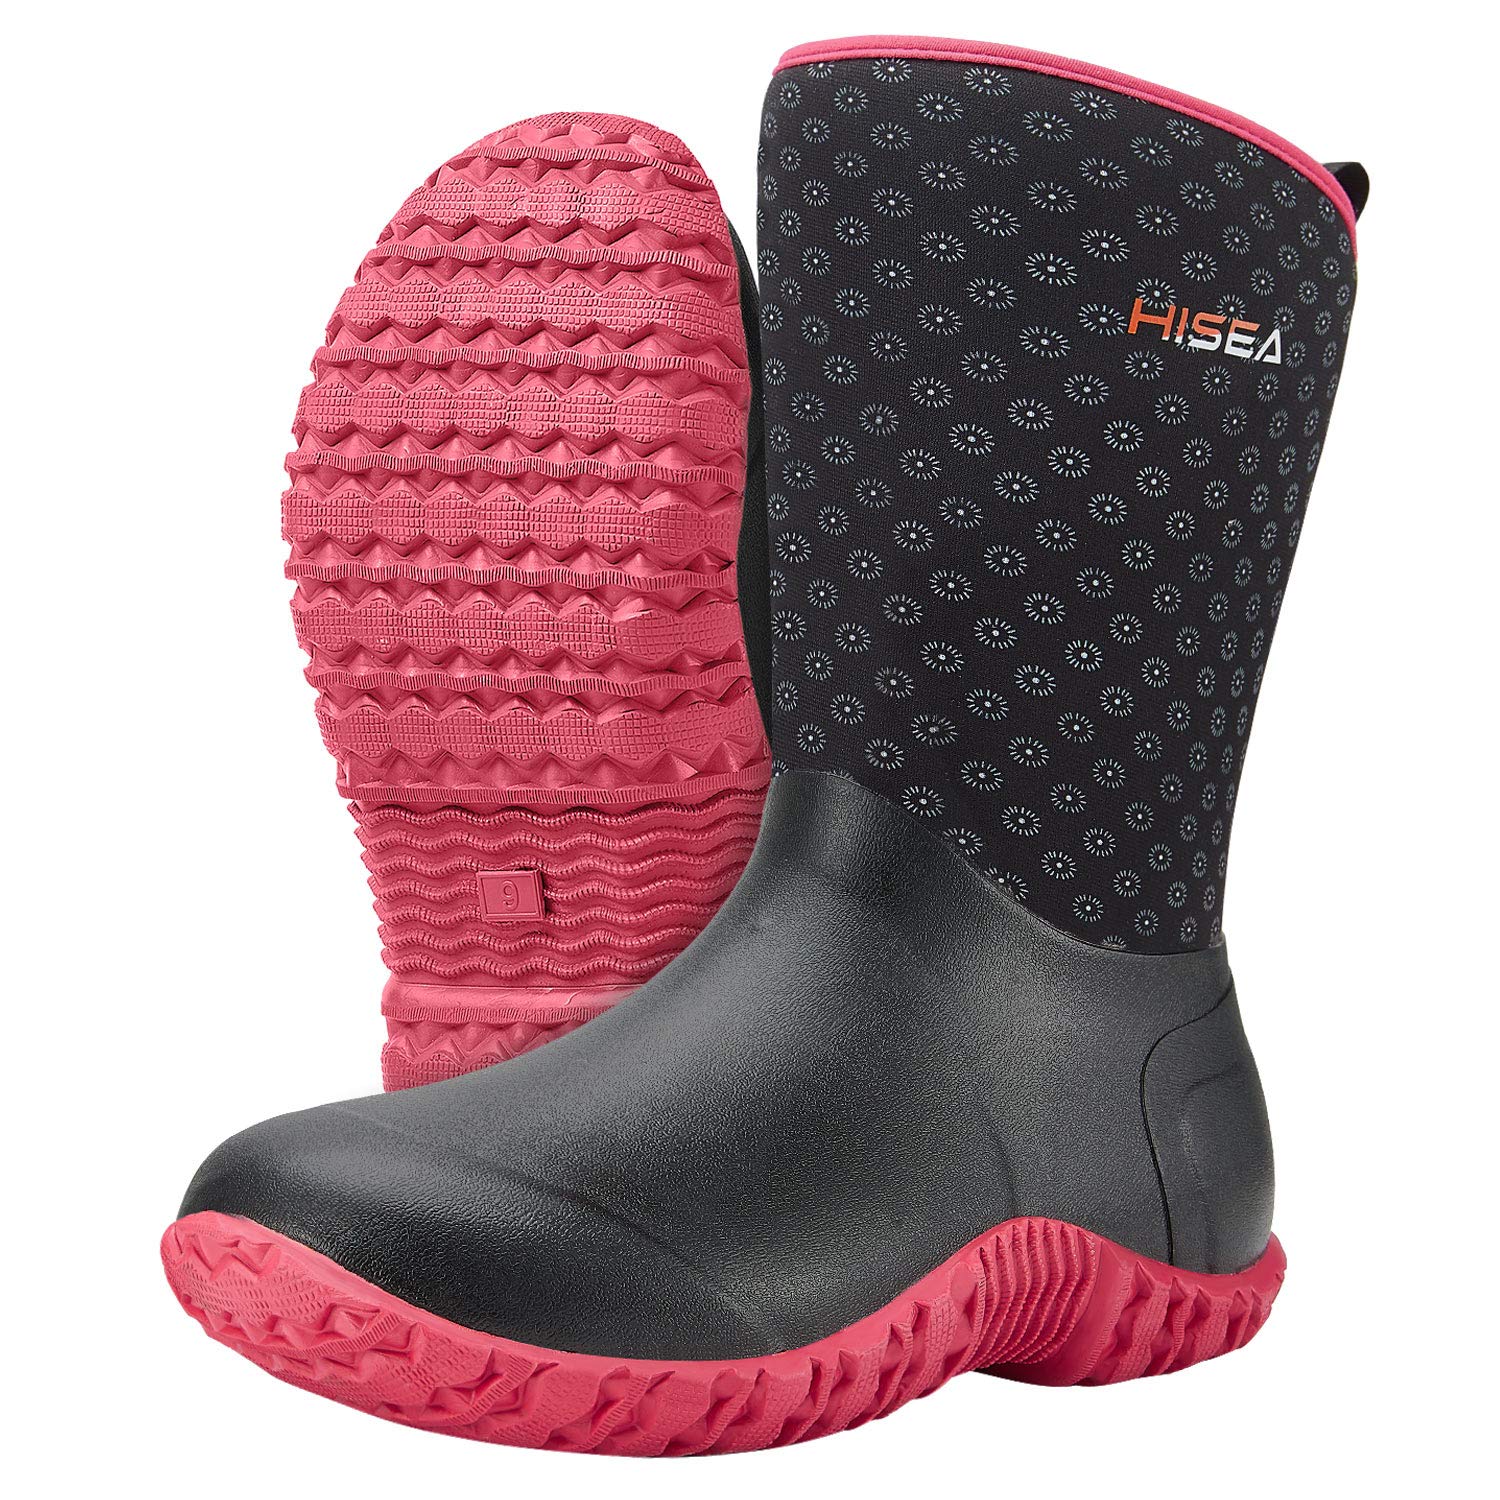 HISEA Women's Rubber Garden Boots Waterproof Insulated Yard Gardening Shoes Mid Height for Mud Working Outdoor 6 Black Dot